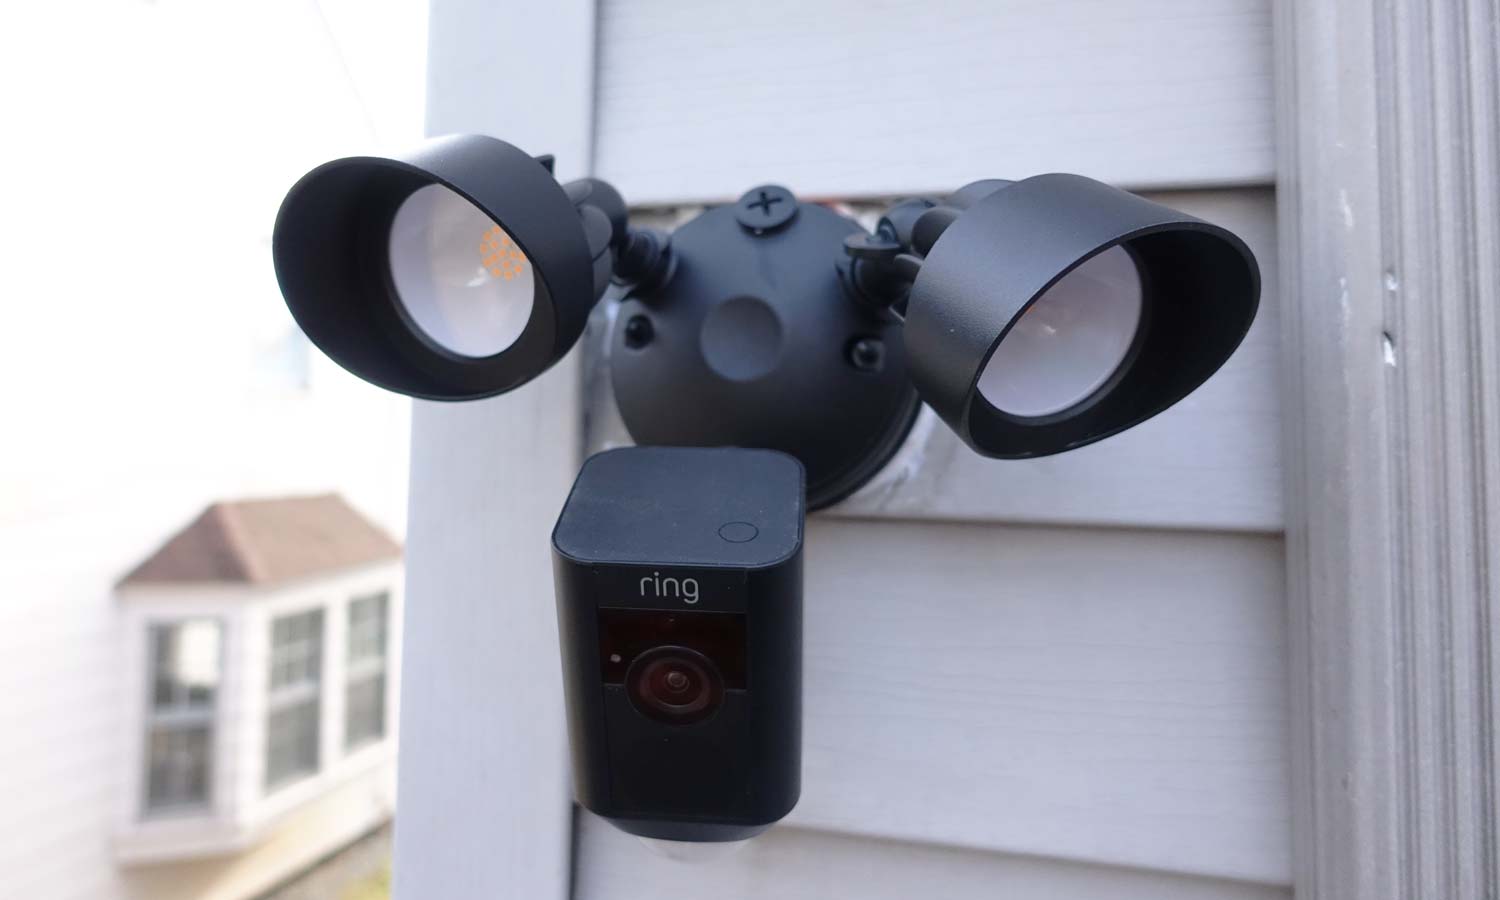 best outdoor security cameras: Ring floodlight camera